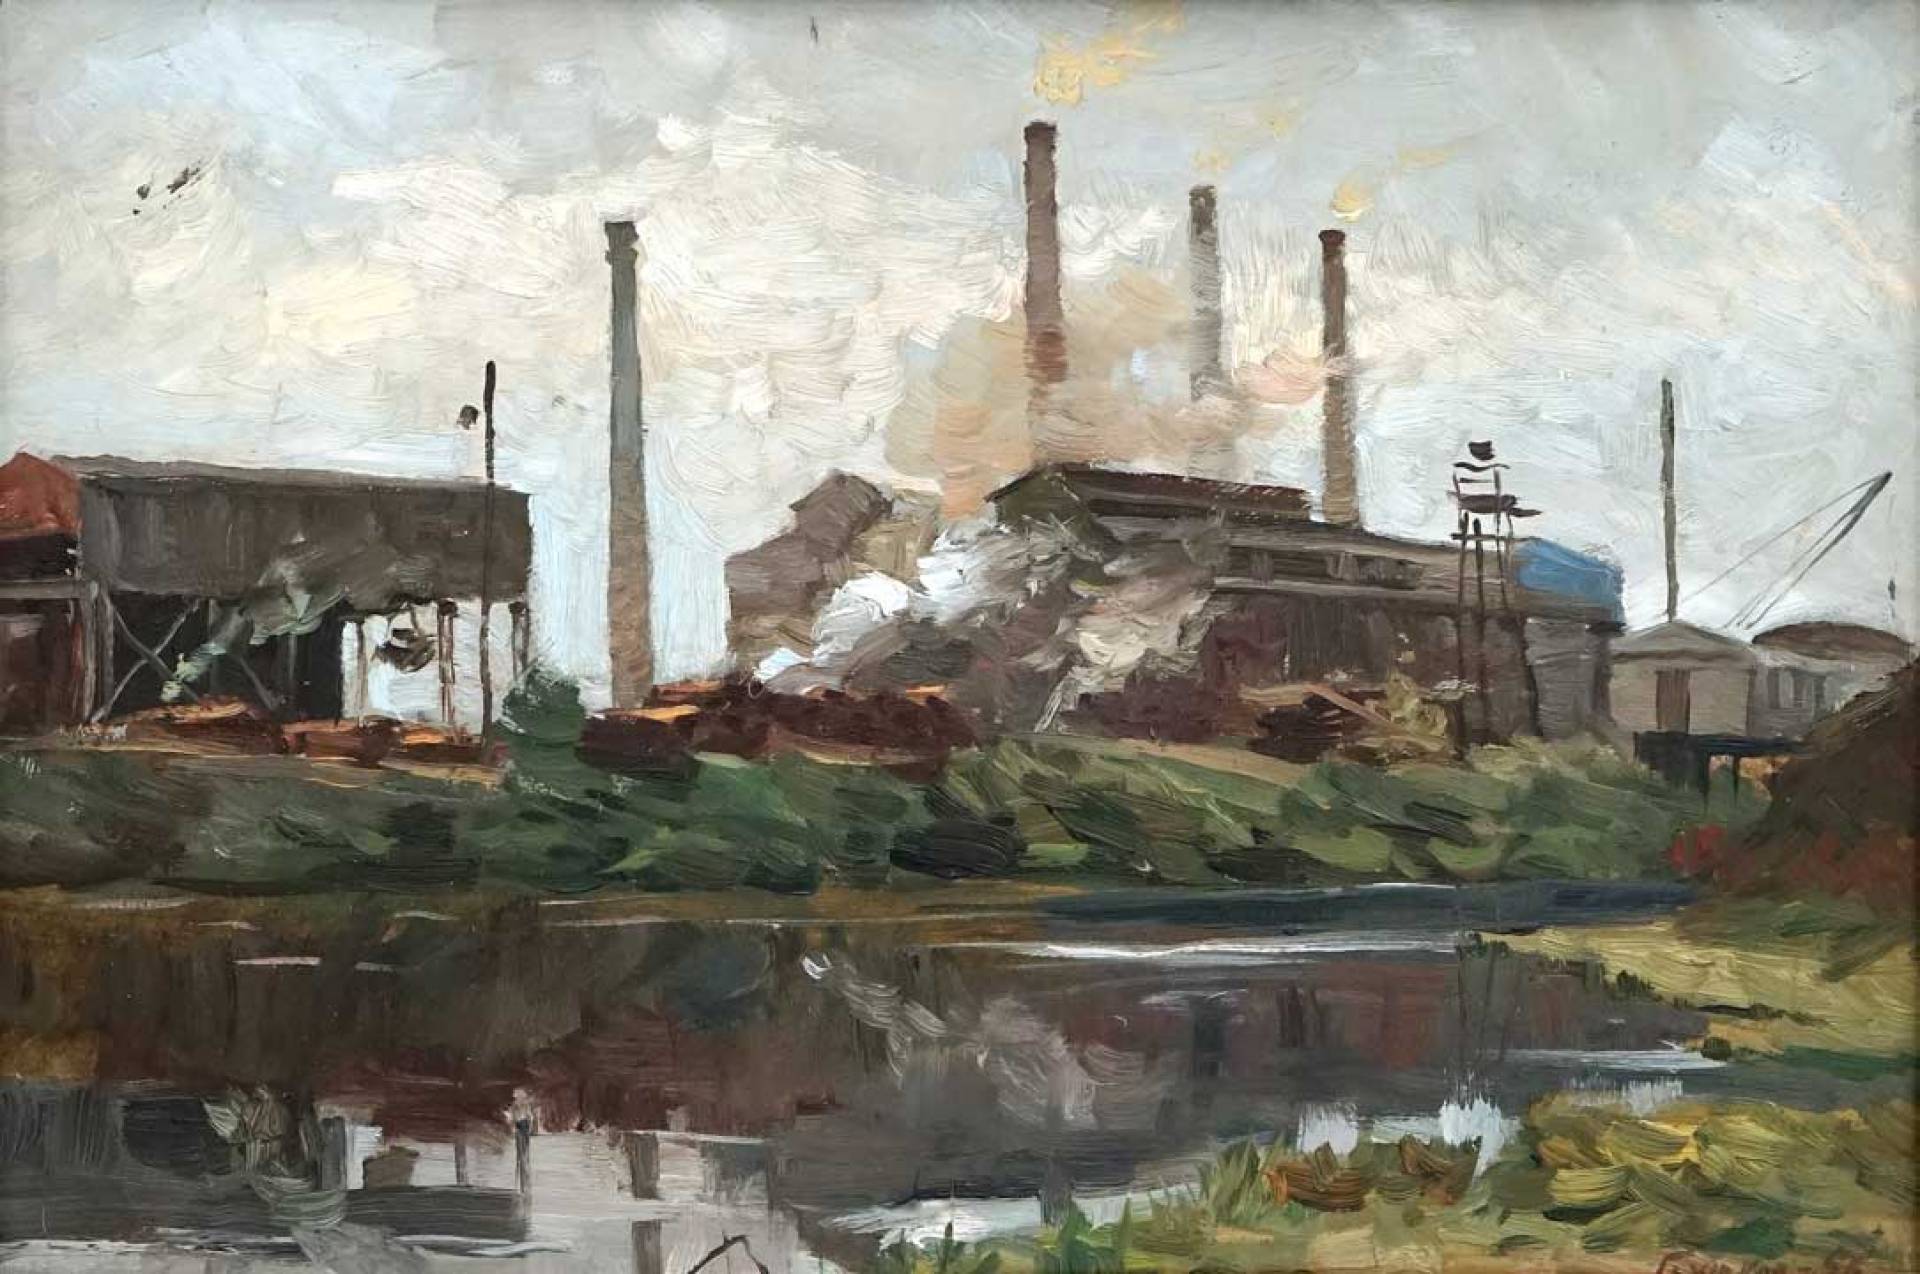 On the Factory - 1, Boris Glushkov, Buy the painting Oil